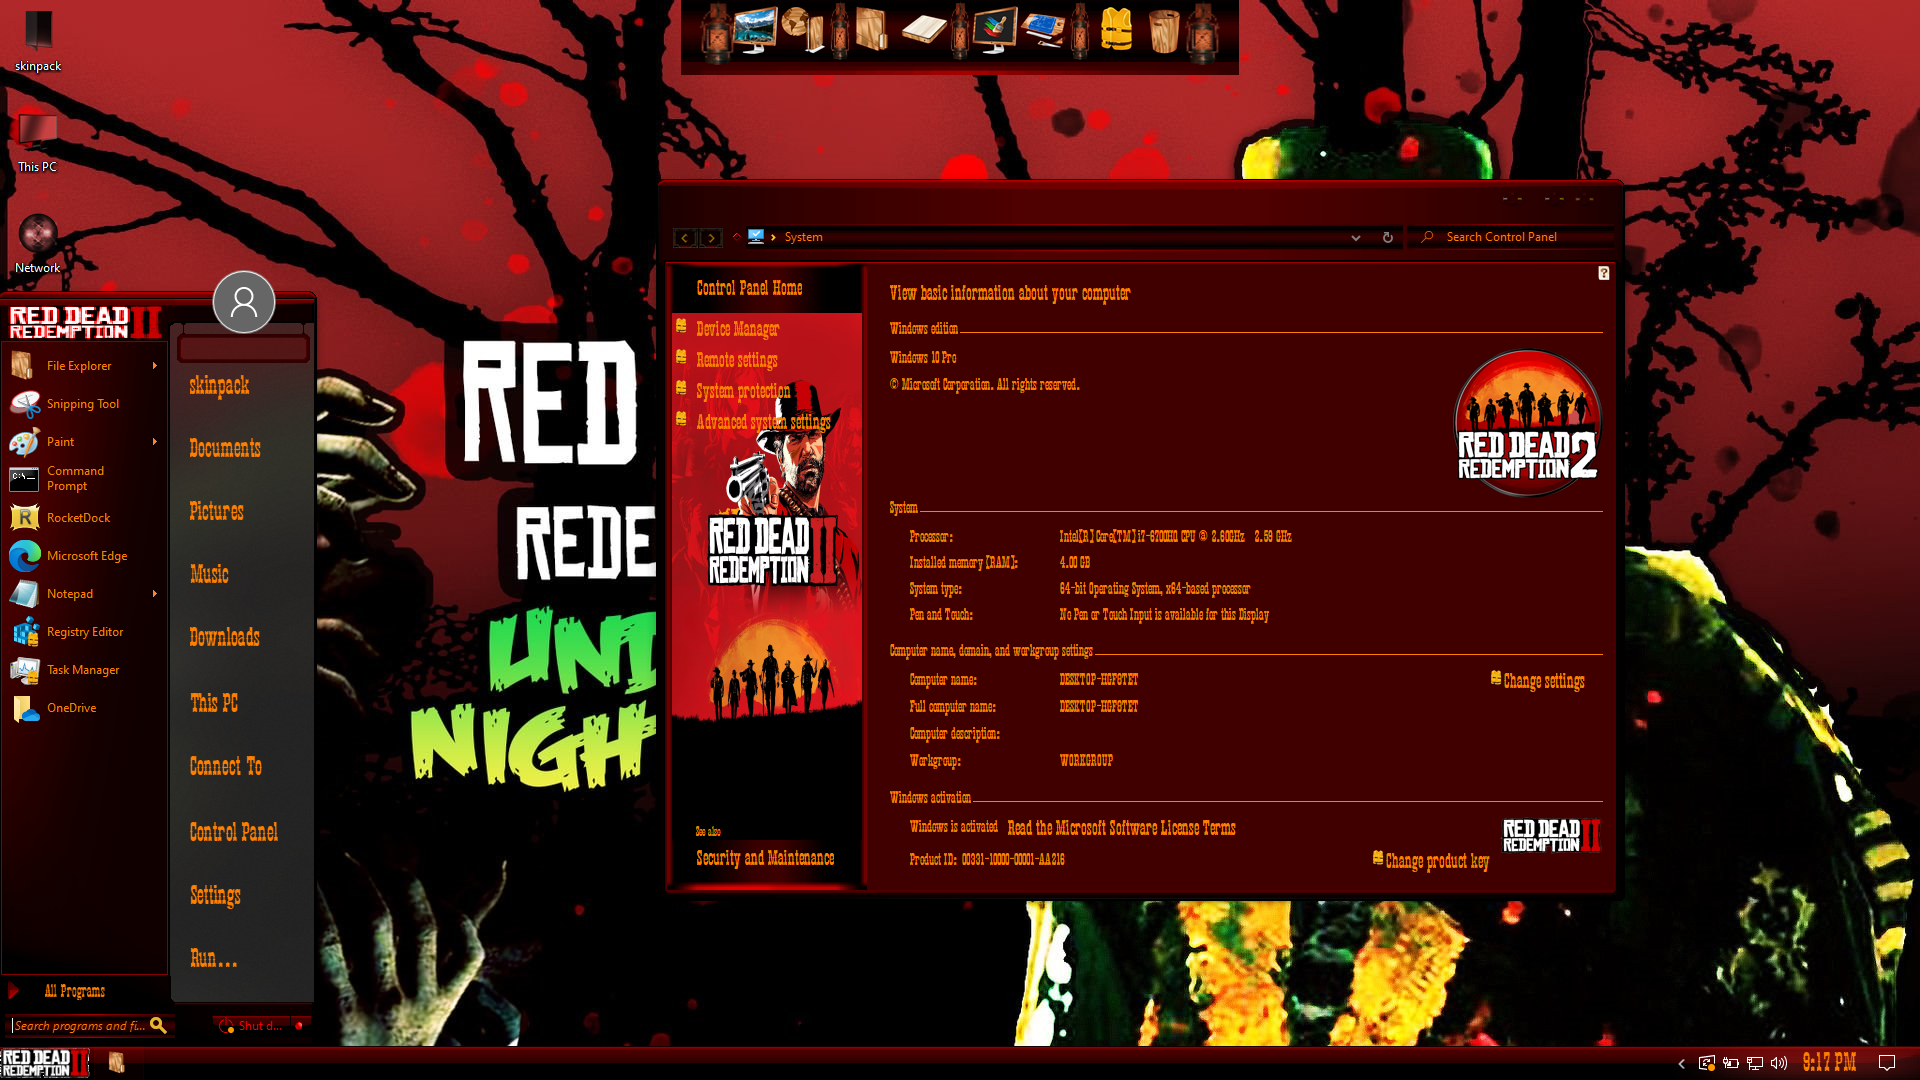 Red Dead II Premium SkinPack for Windows 10